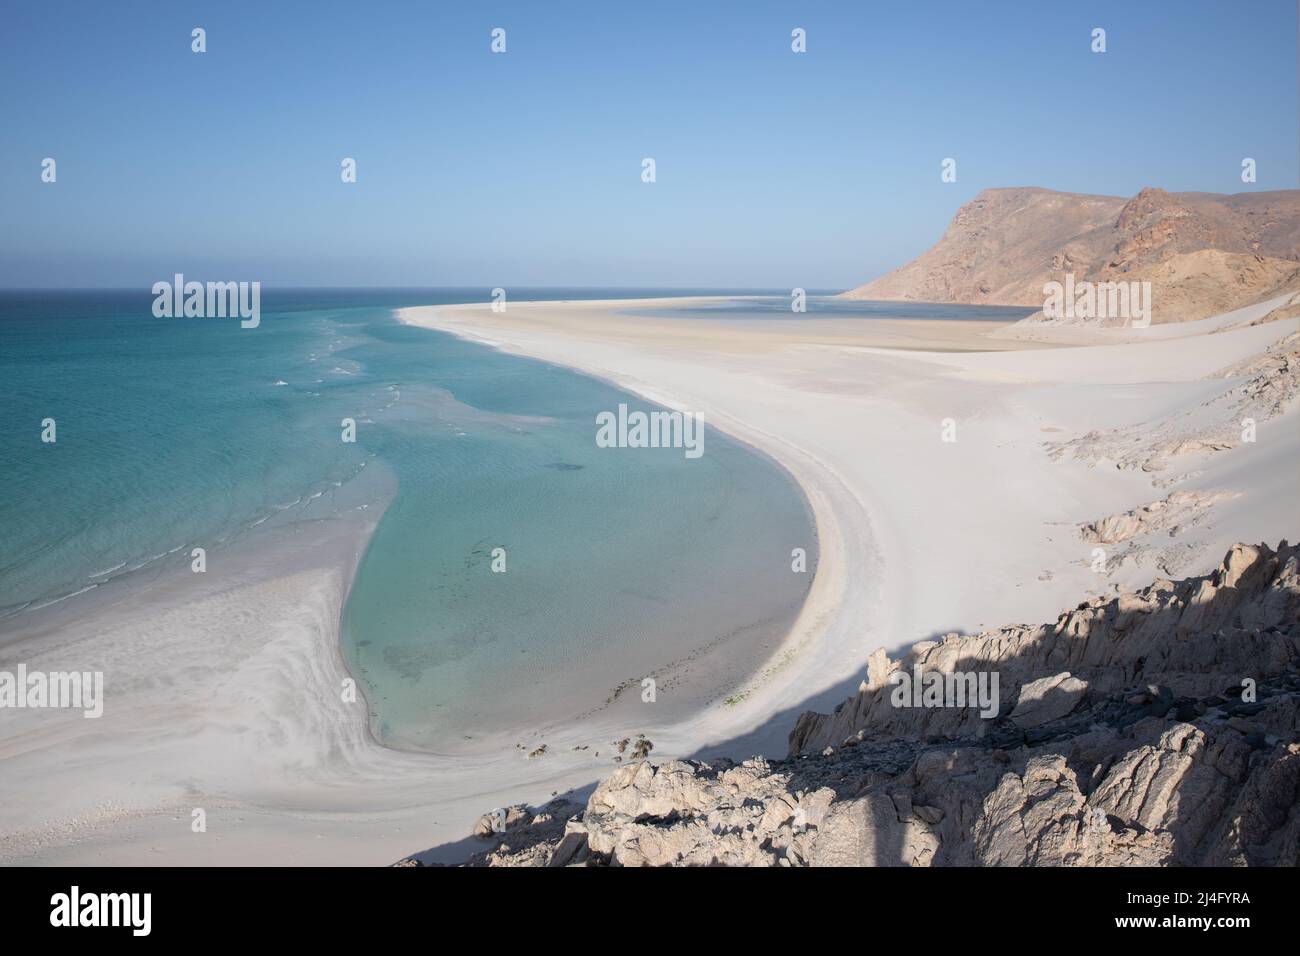 Stunning lagoon on the coast with white sand. Socotra, Yemen. Stock Photo